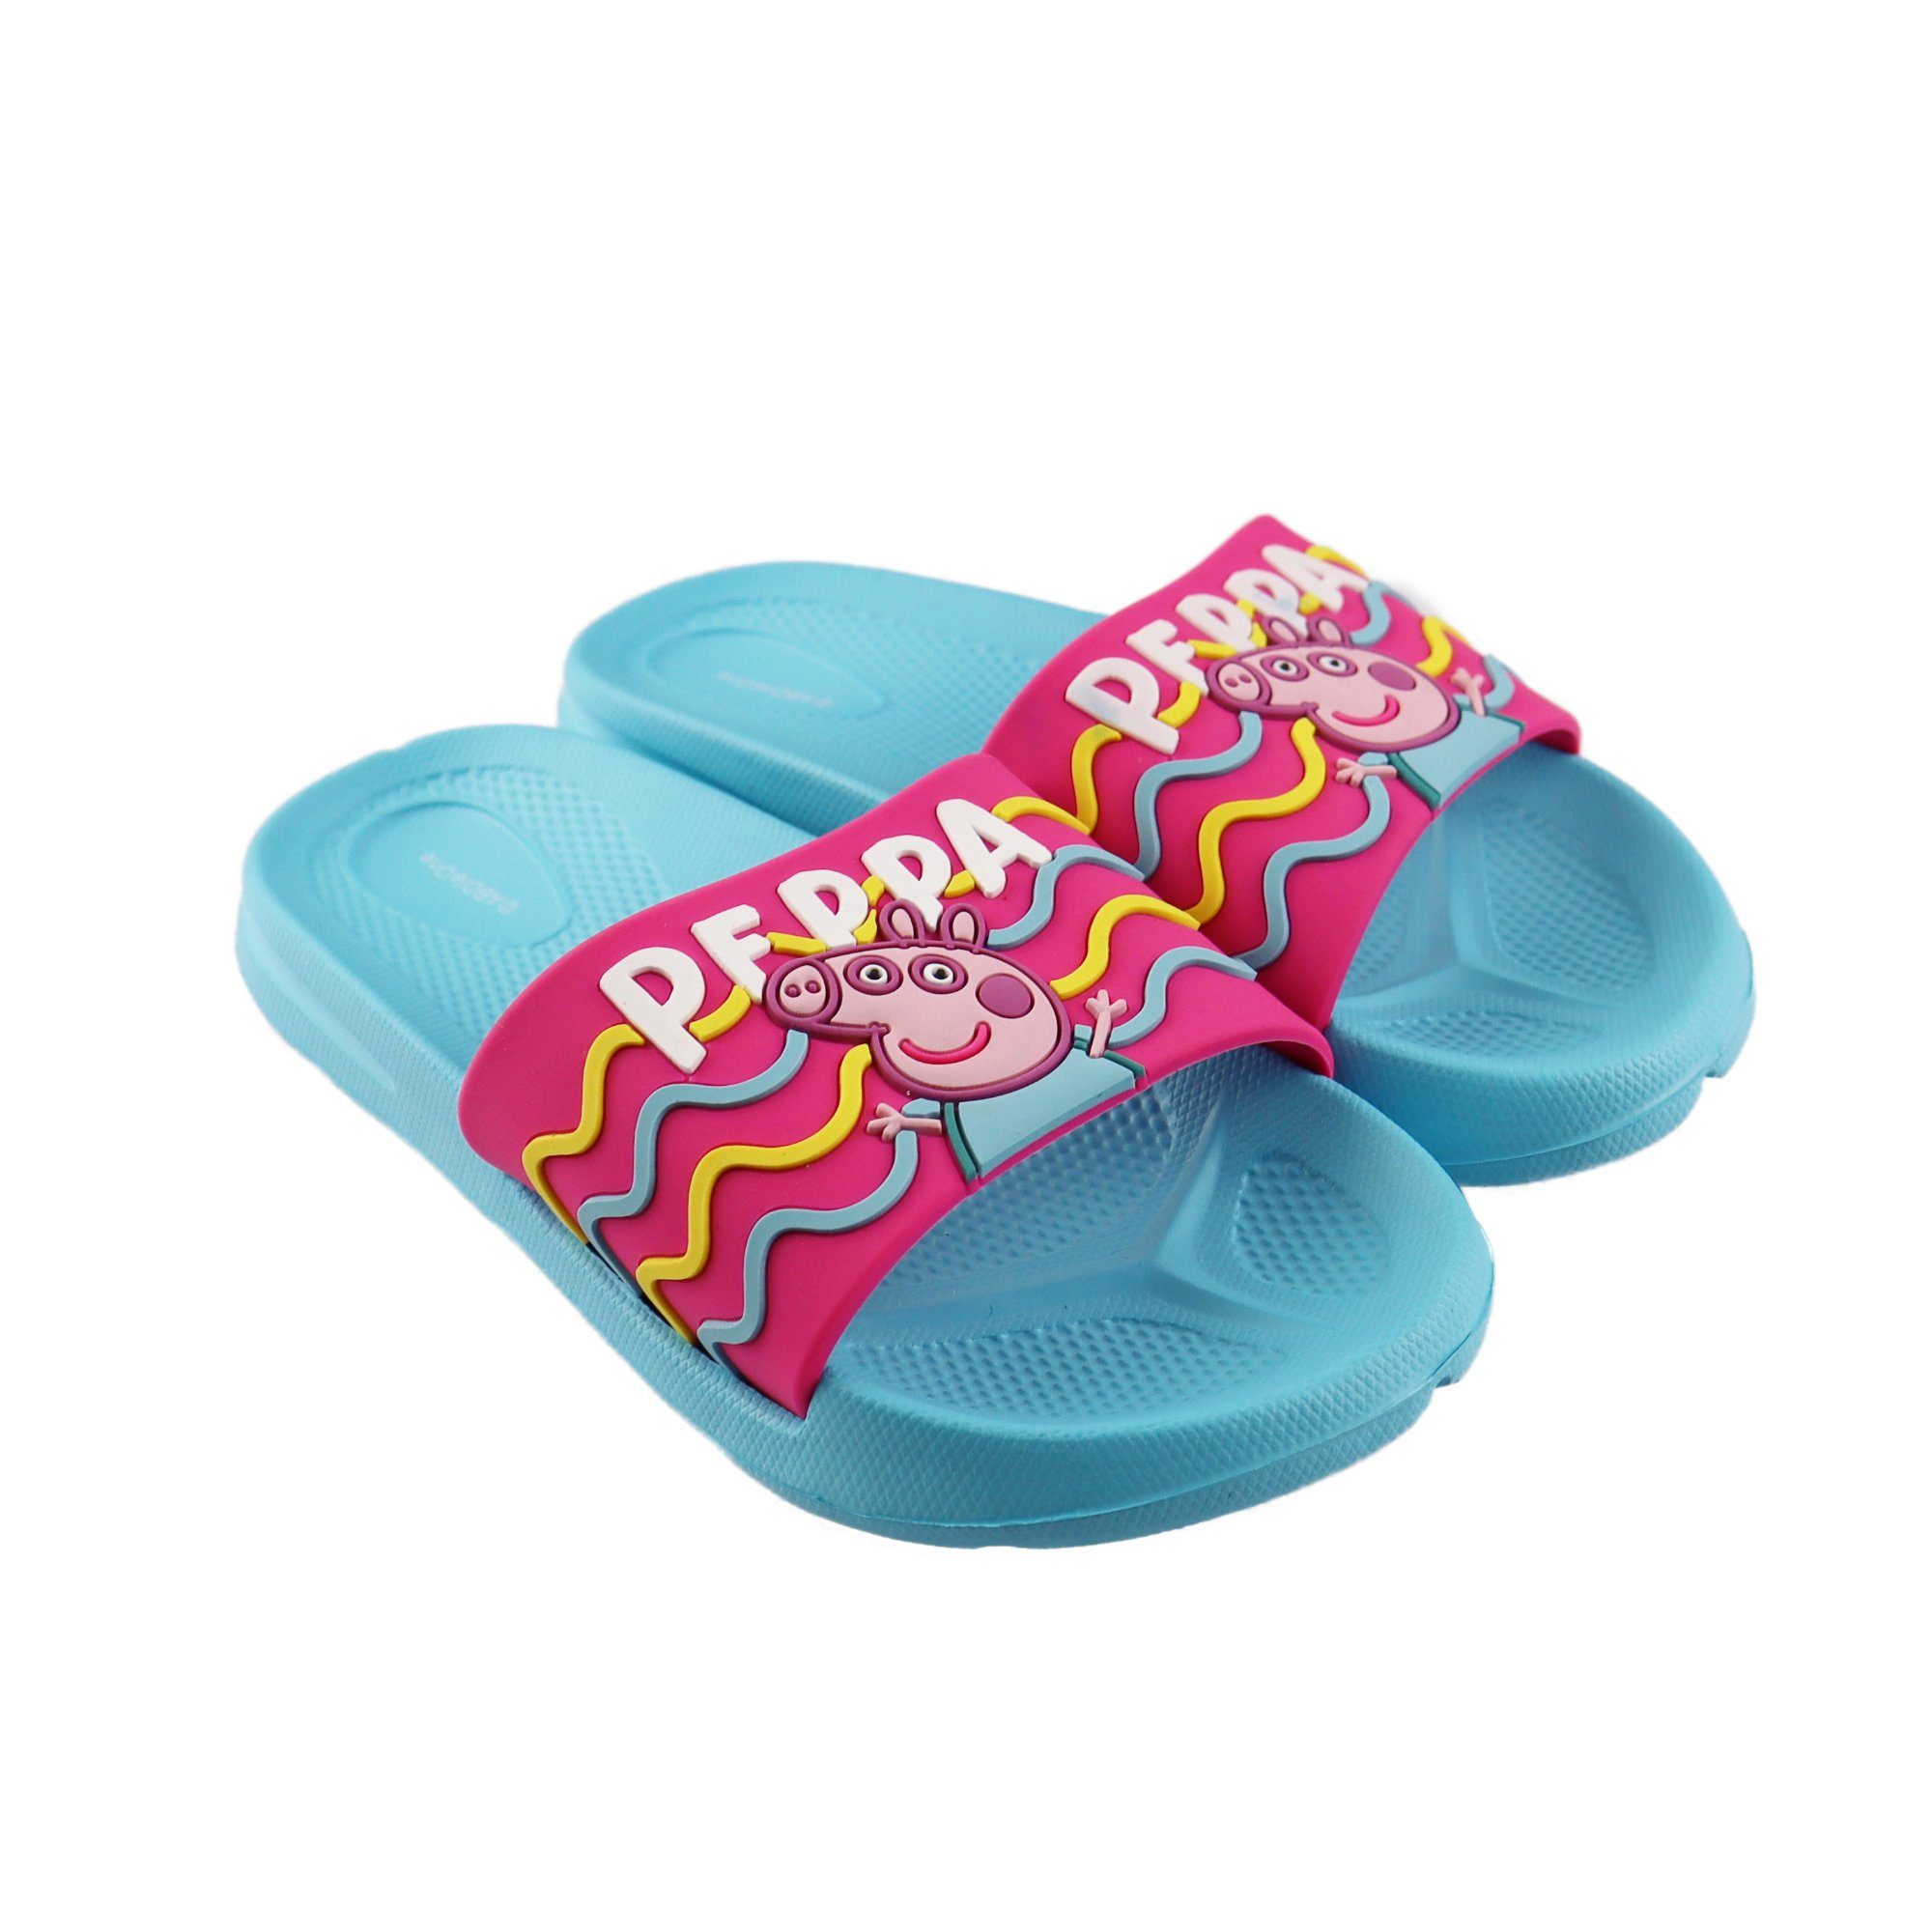 Peppa Pig Peppa Wutz Mädchen Kinder Sandalen - 3D Optik Sandale Gr. 25 bis  32, Hellblau